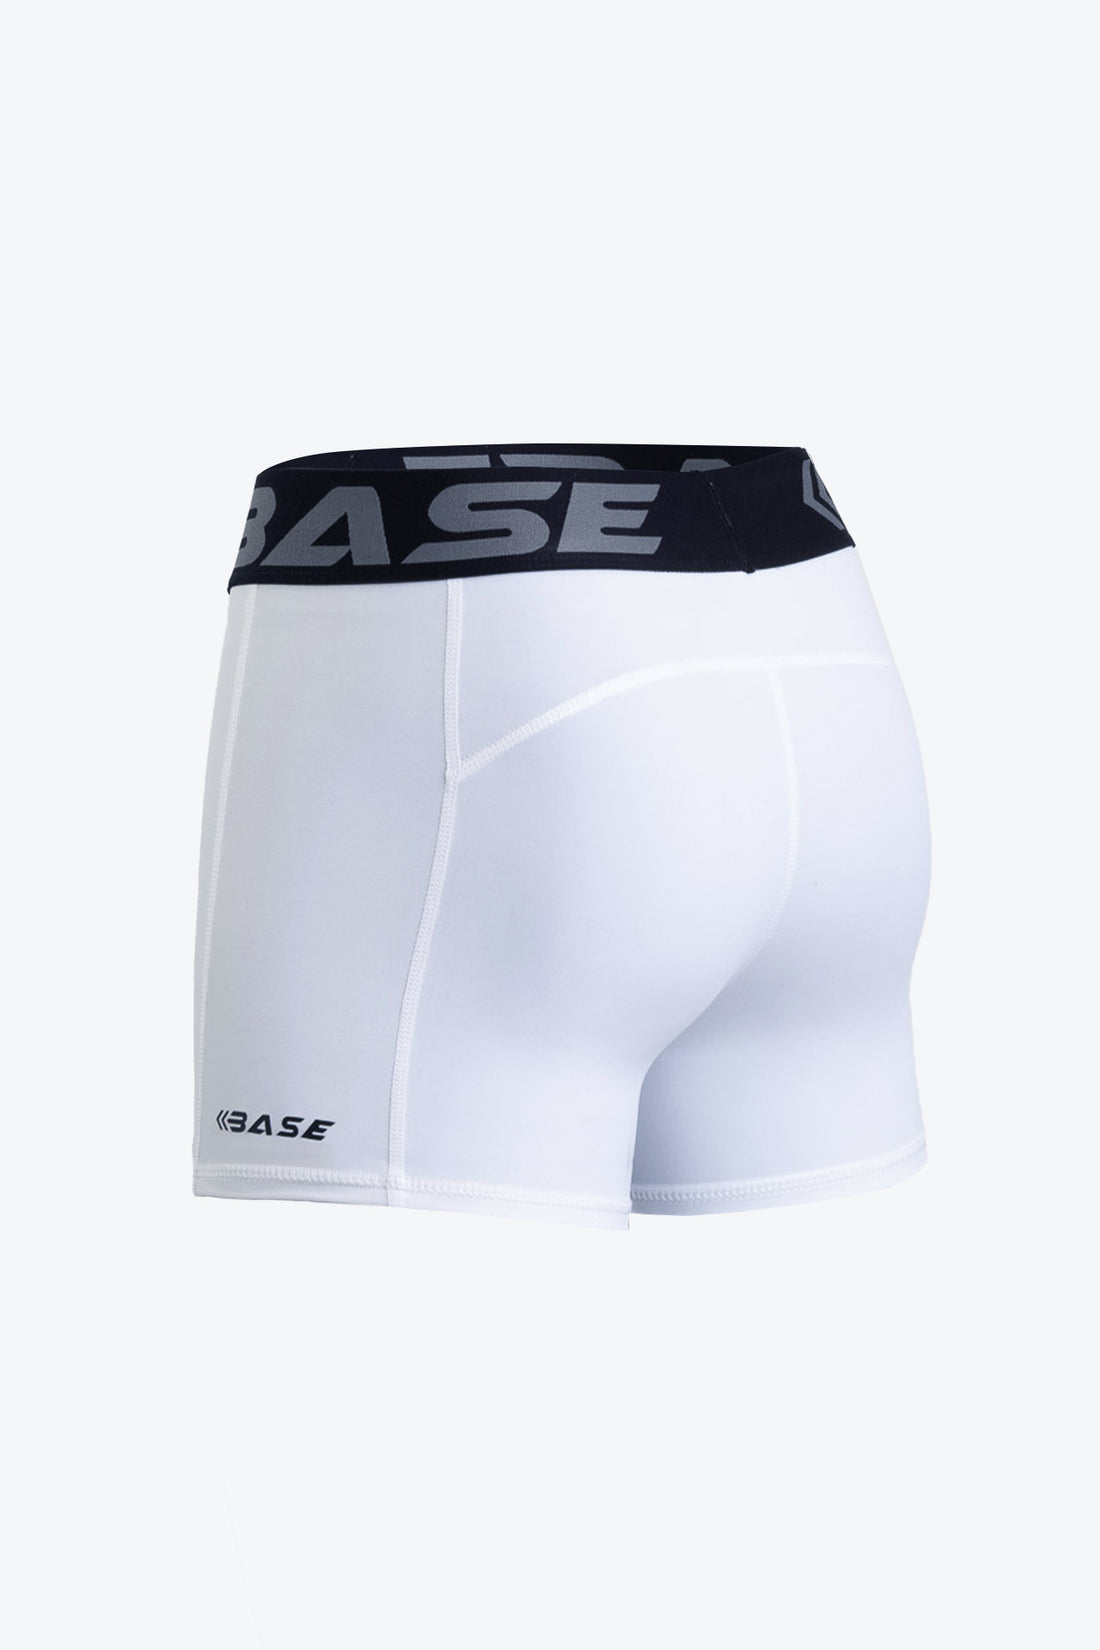 BASE Youth Compression Shorts - White